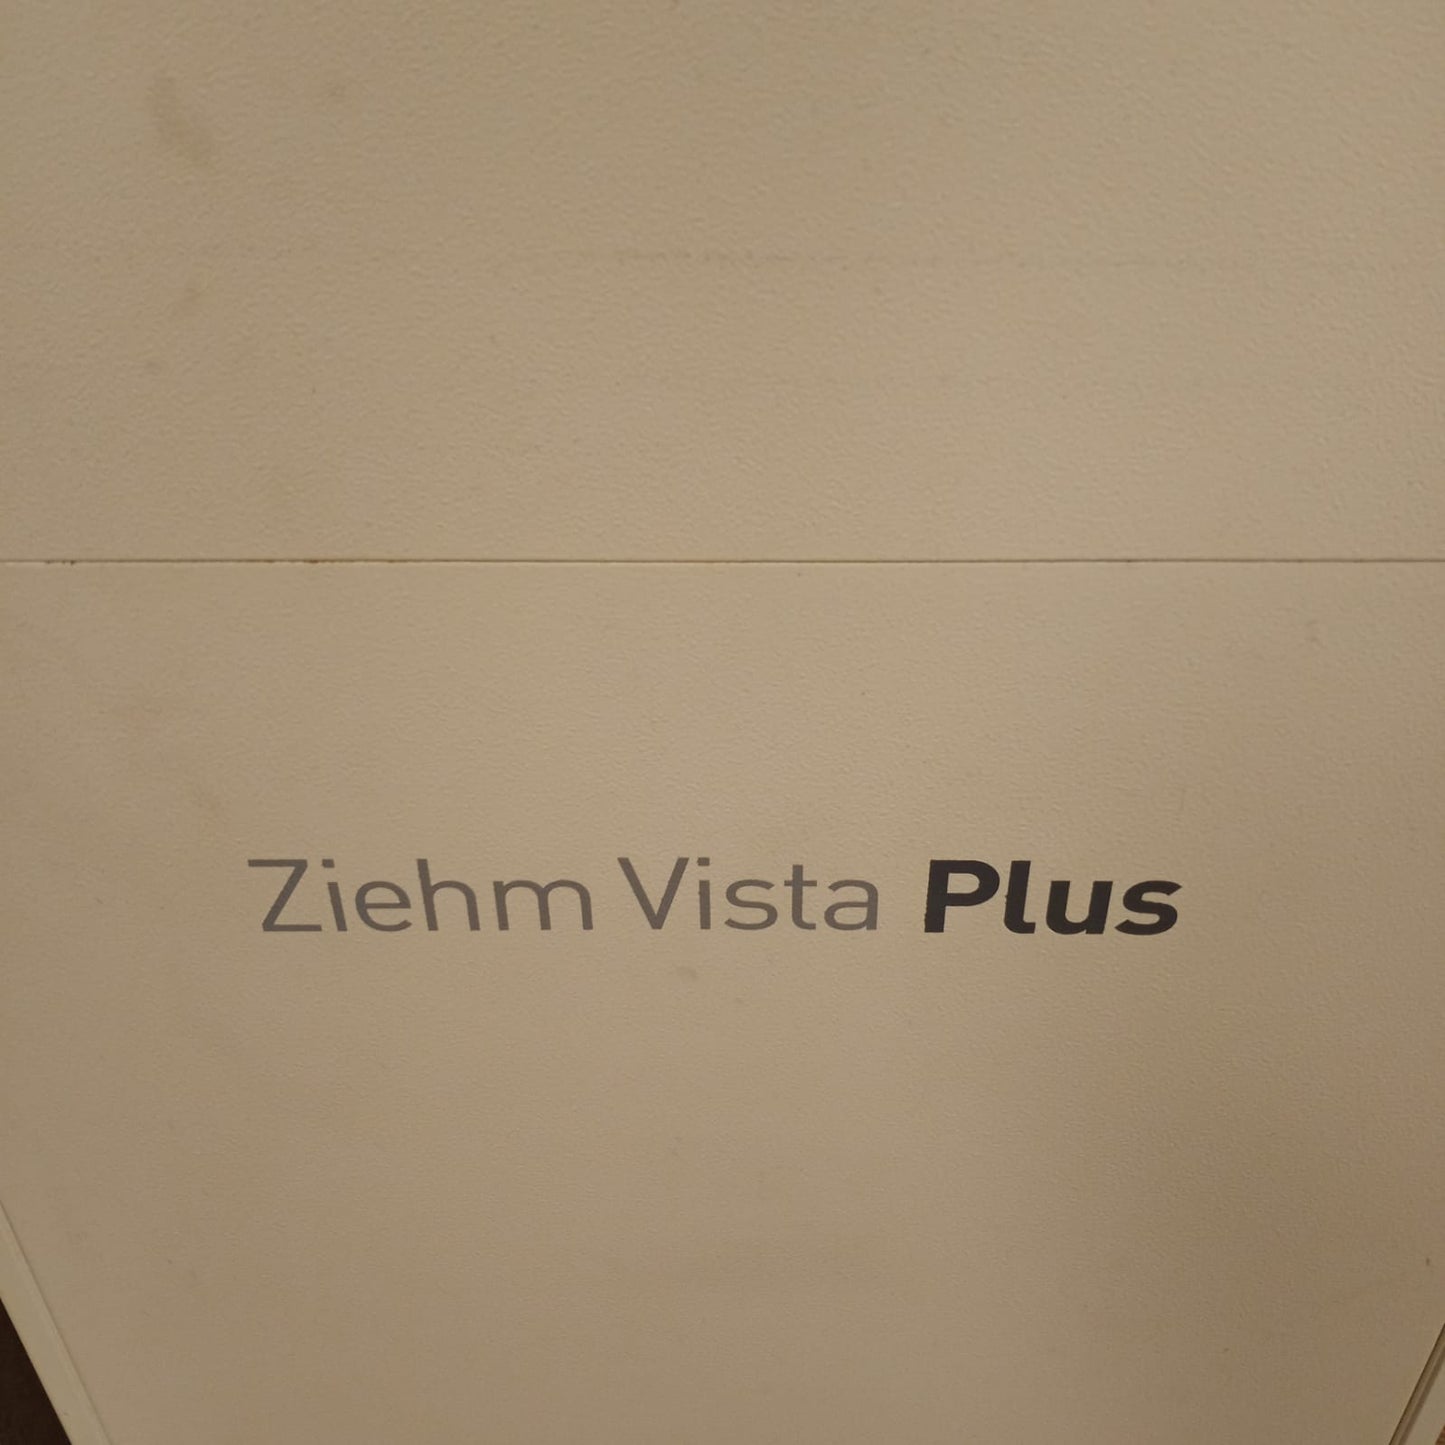 Ziehm Vista Plus With Flat Pannel